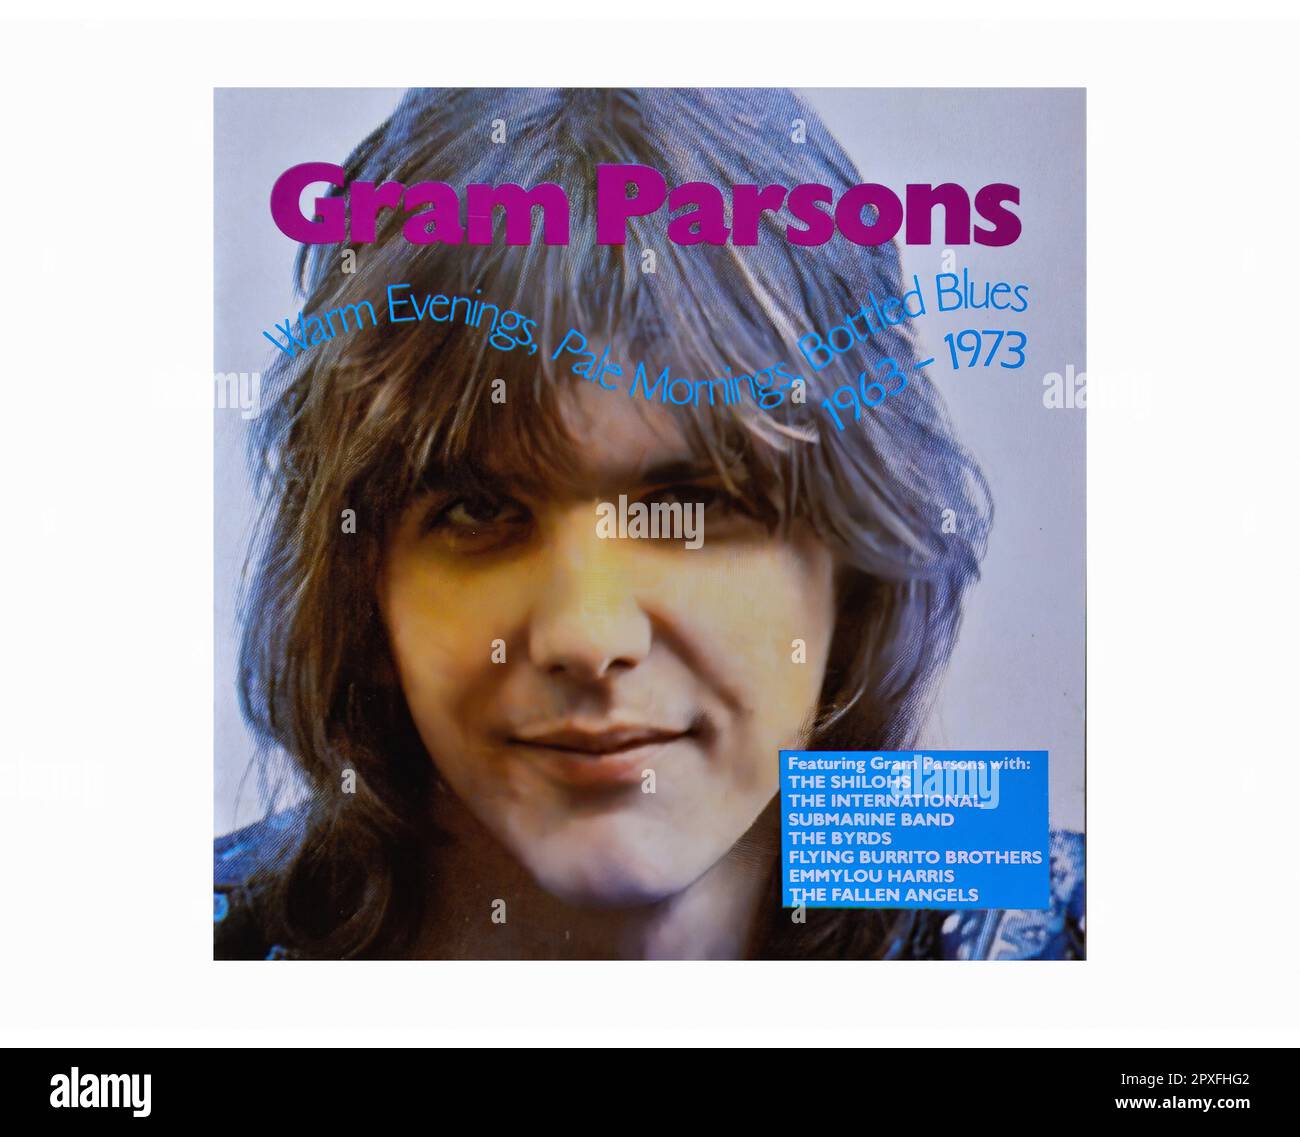 Gram Parsons - serate calde, Palme, Blues in bottiglia 1963 - 1973 - Vintage L.P Music Vinyl Record Foto Stock